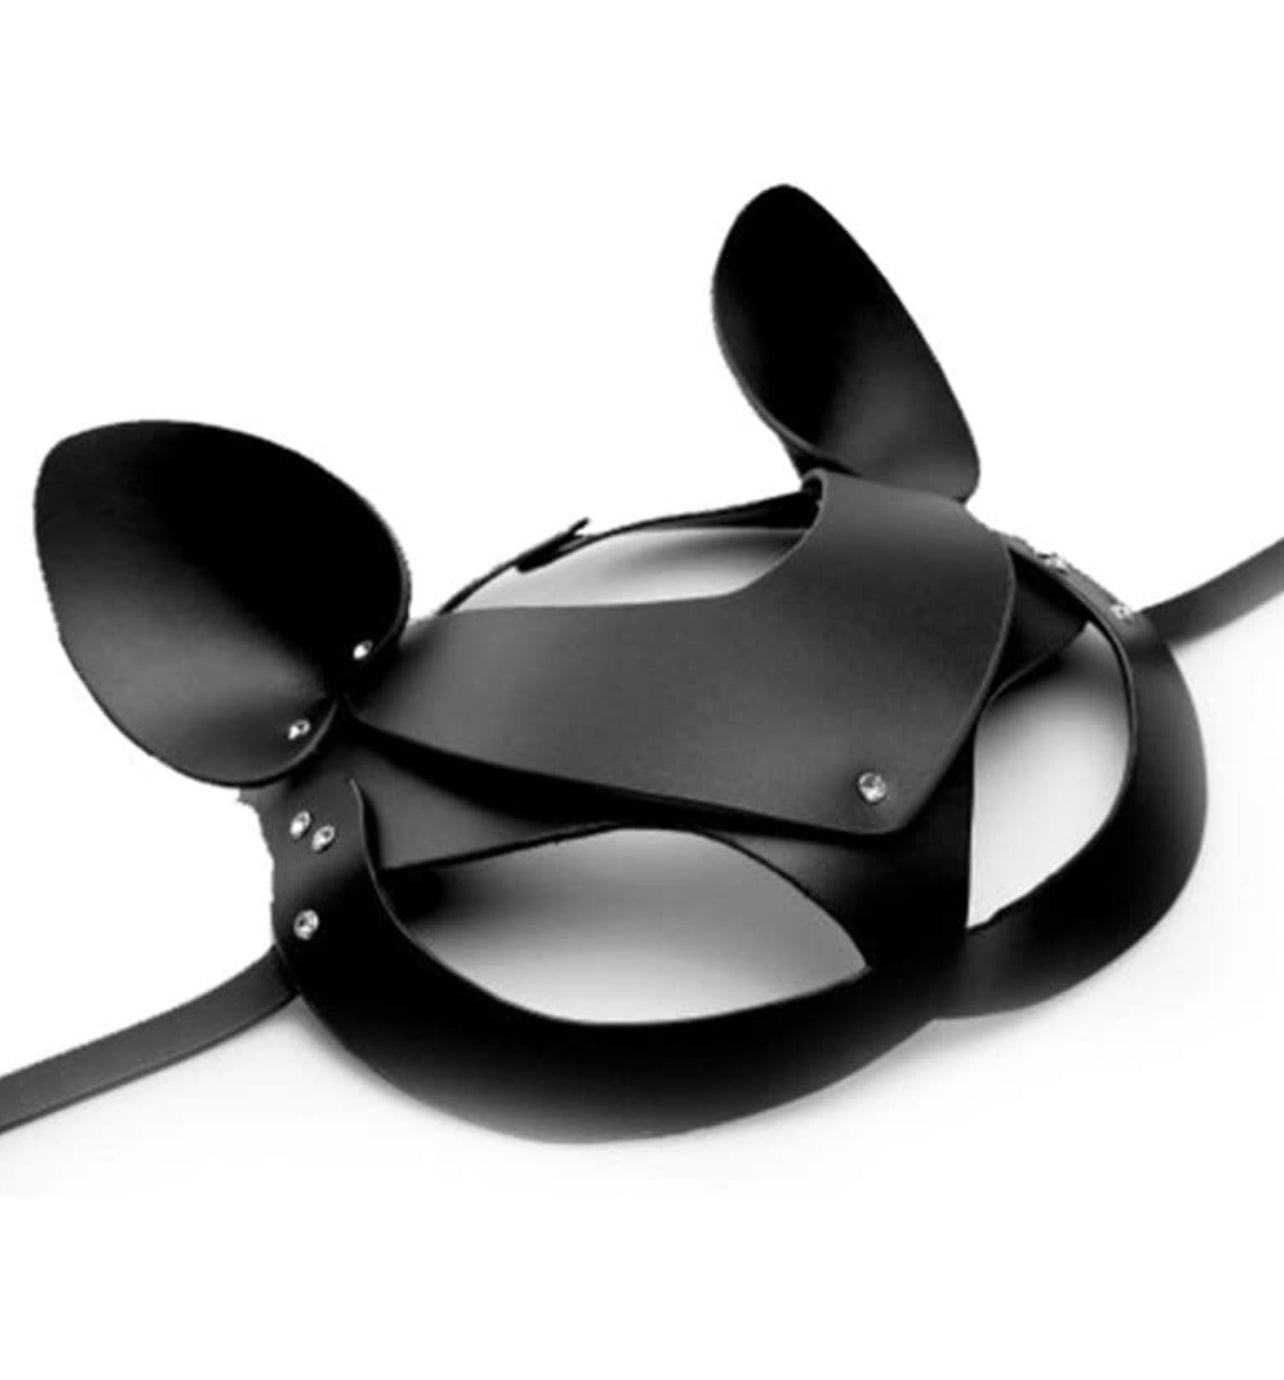 Tailz | Black Cat Rhinestone Studded Mask & Furry Tail Plug Set